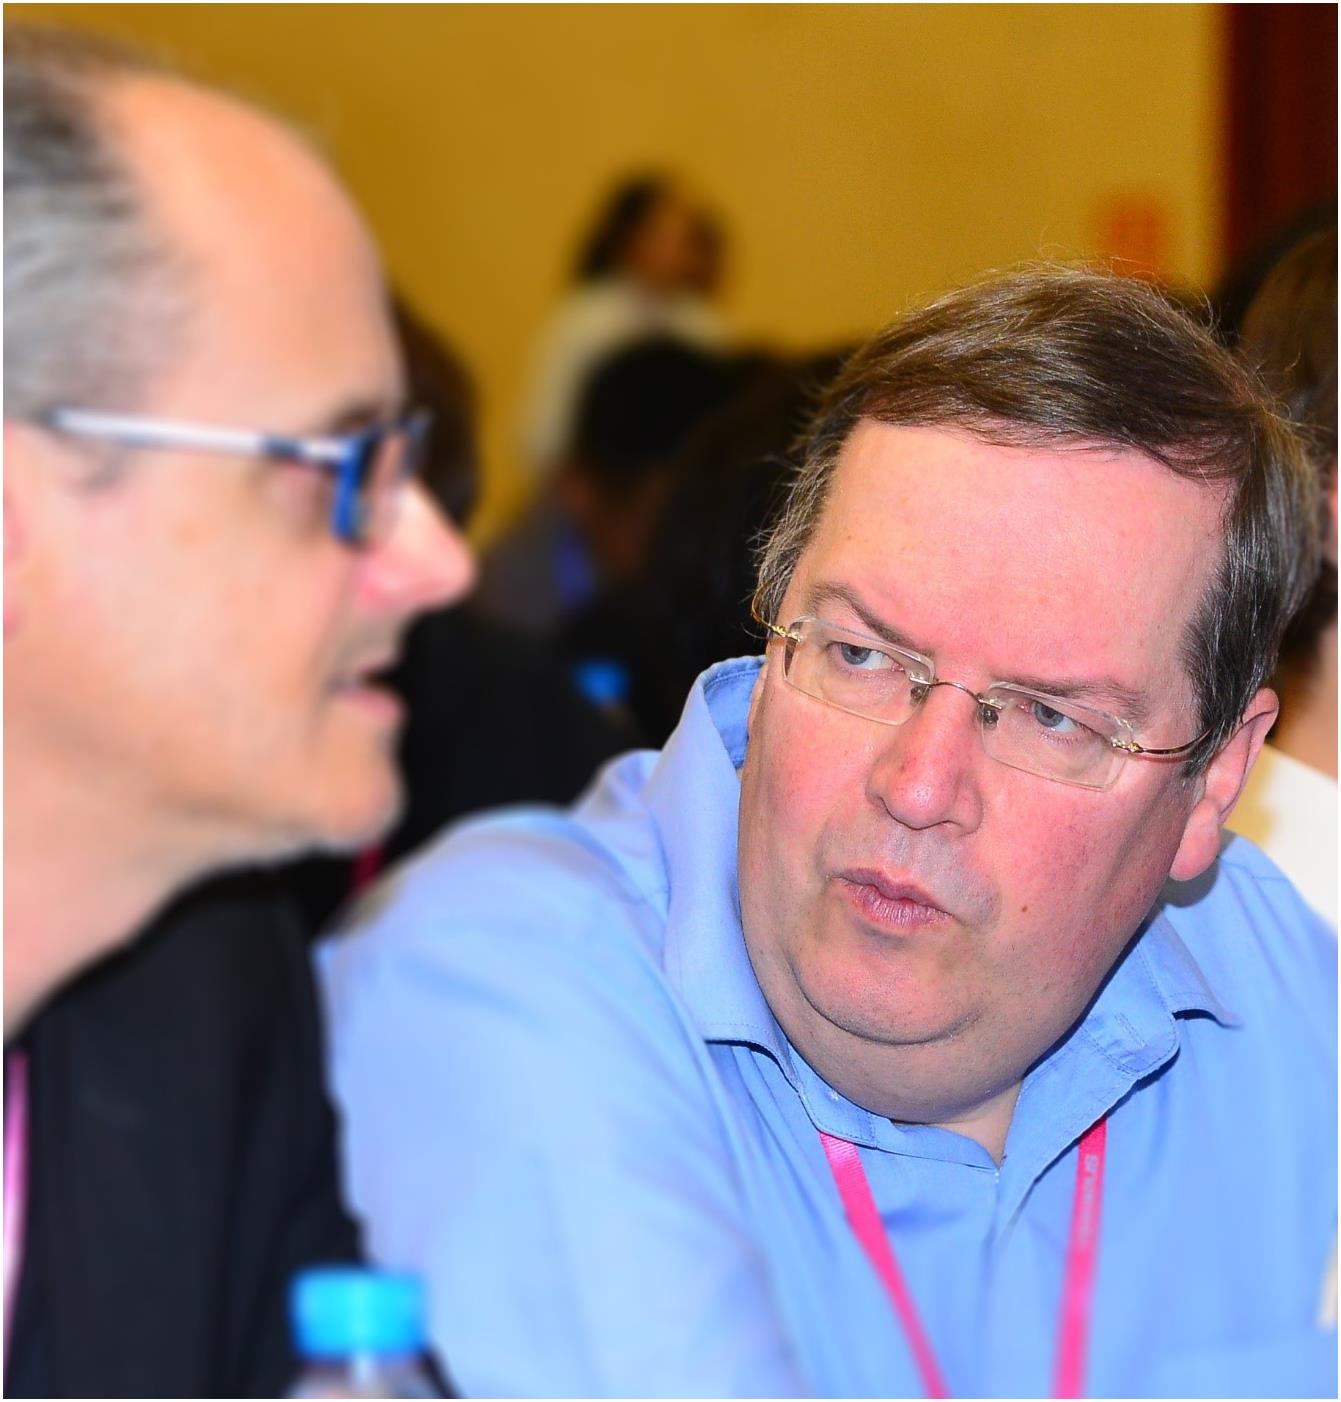 David Neely (right) in discussion with Leonida Gizzi (Istituto Nazionale di Ottica, Pisa, Italy) at the HPLSE symposium, Suzhou, China, 2018.